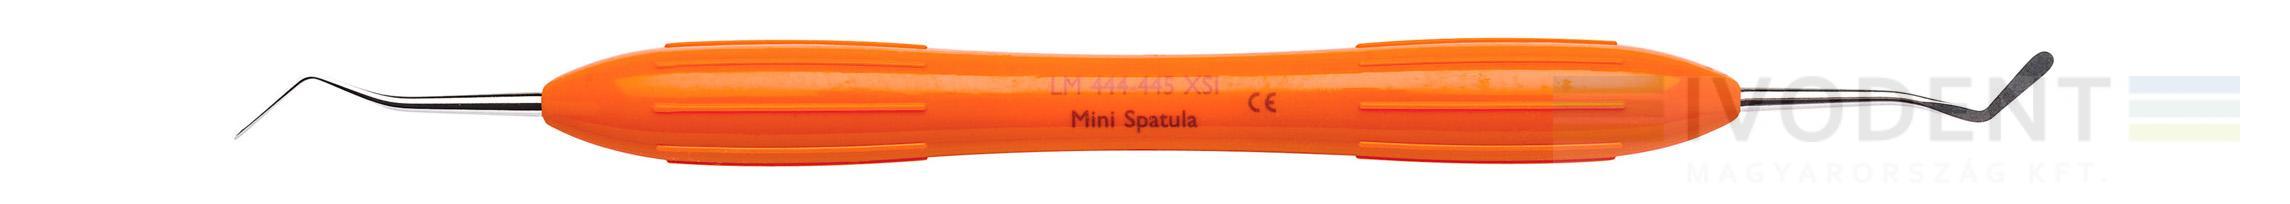 LM Mini Spatula